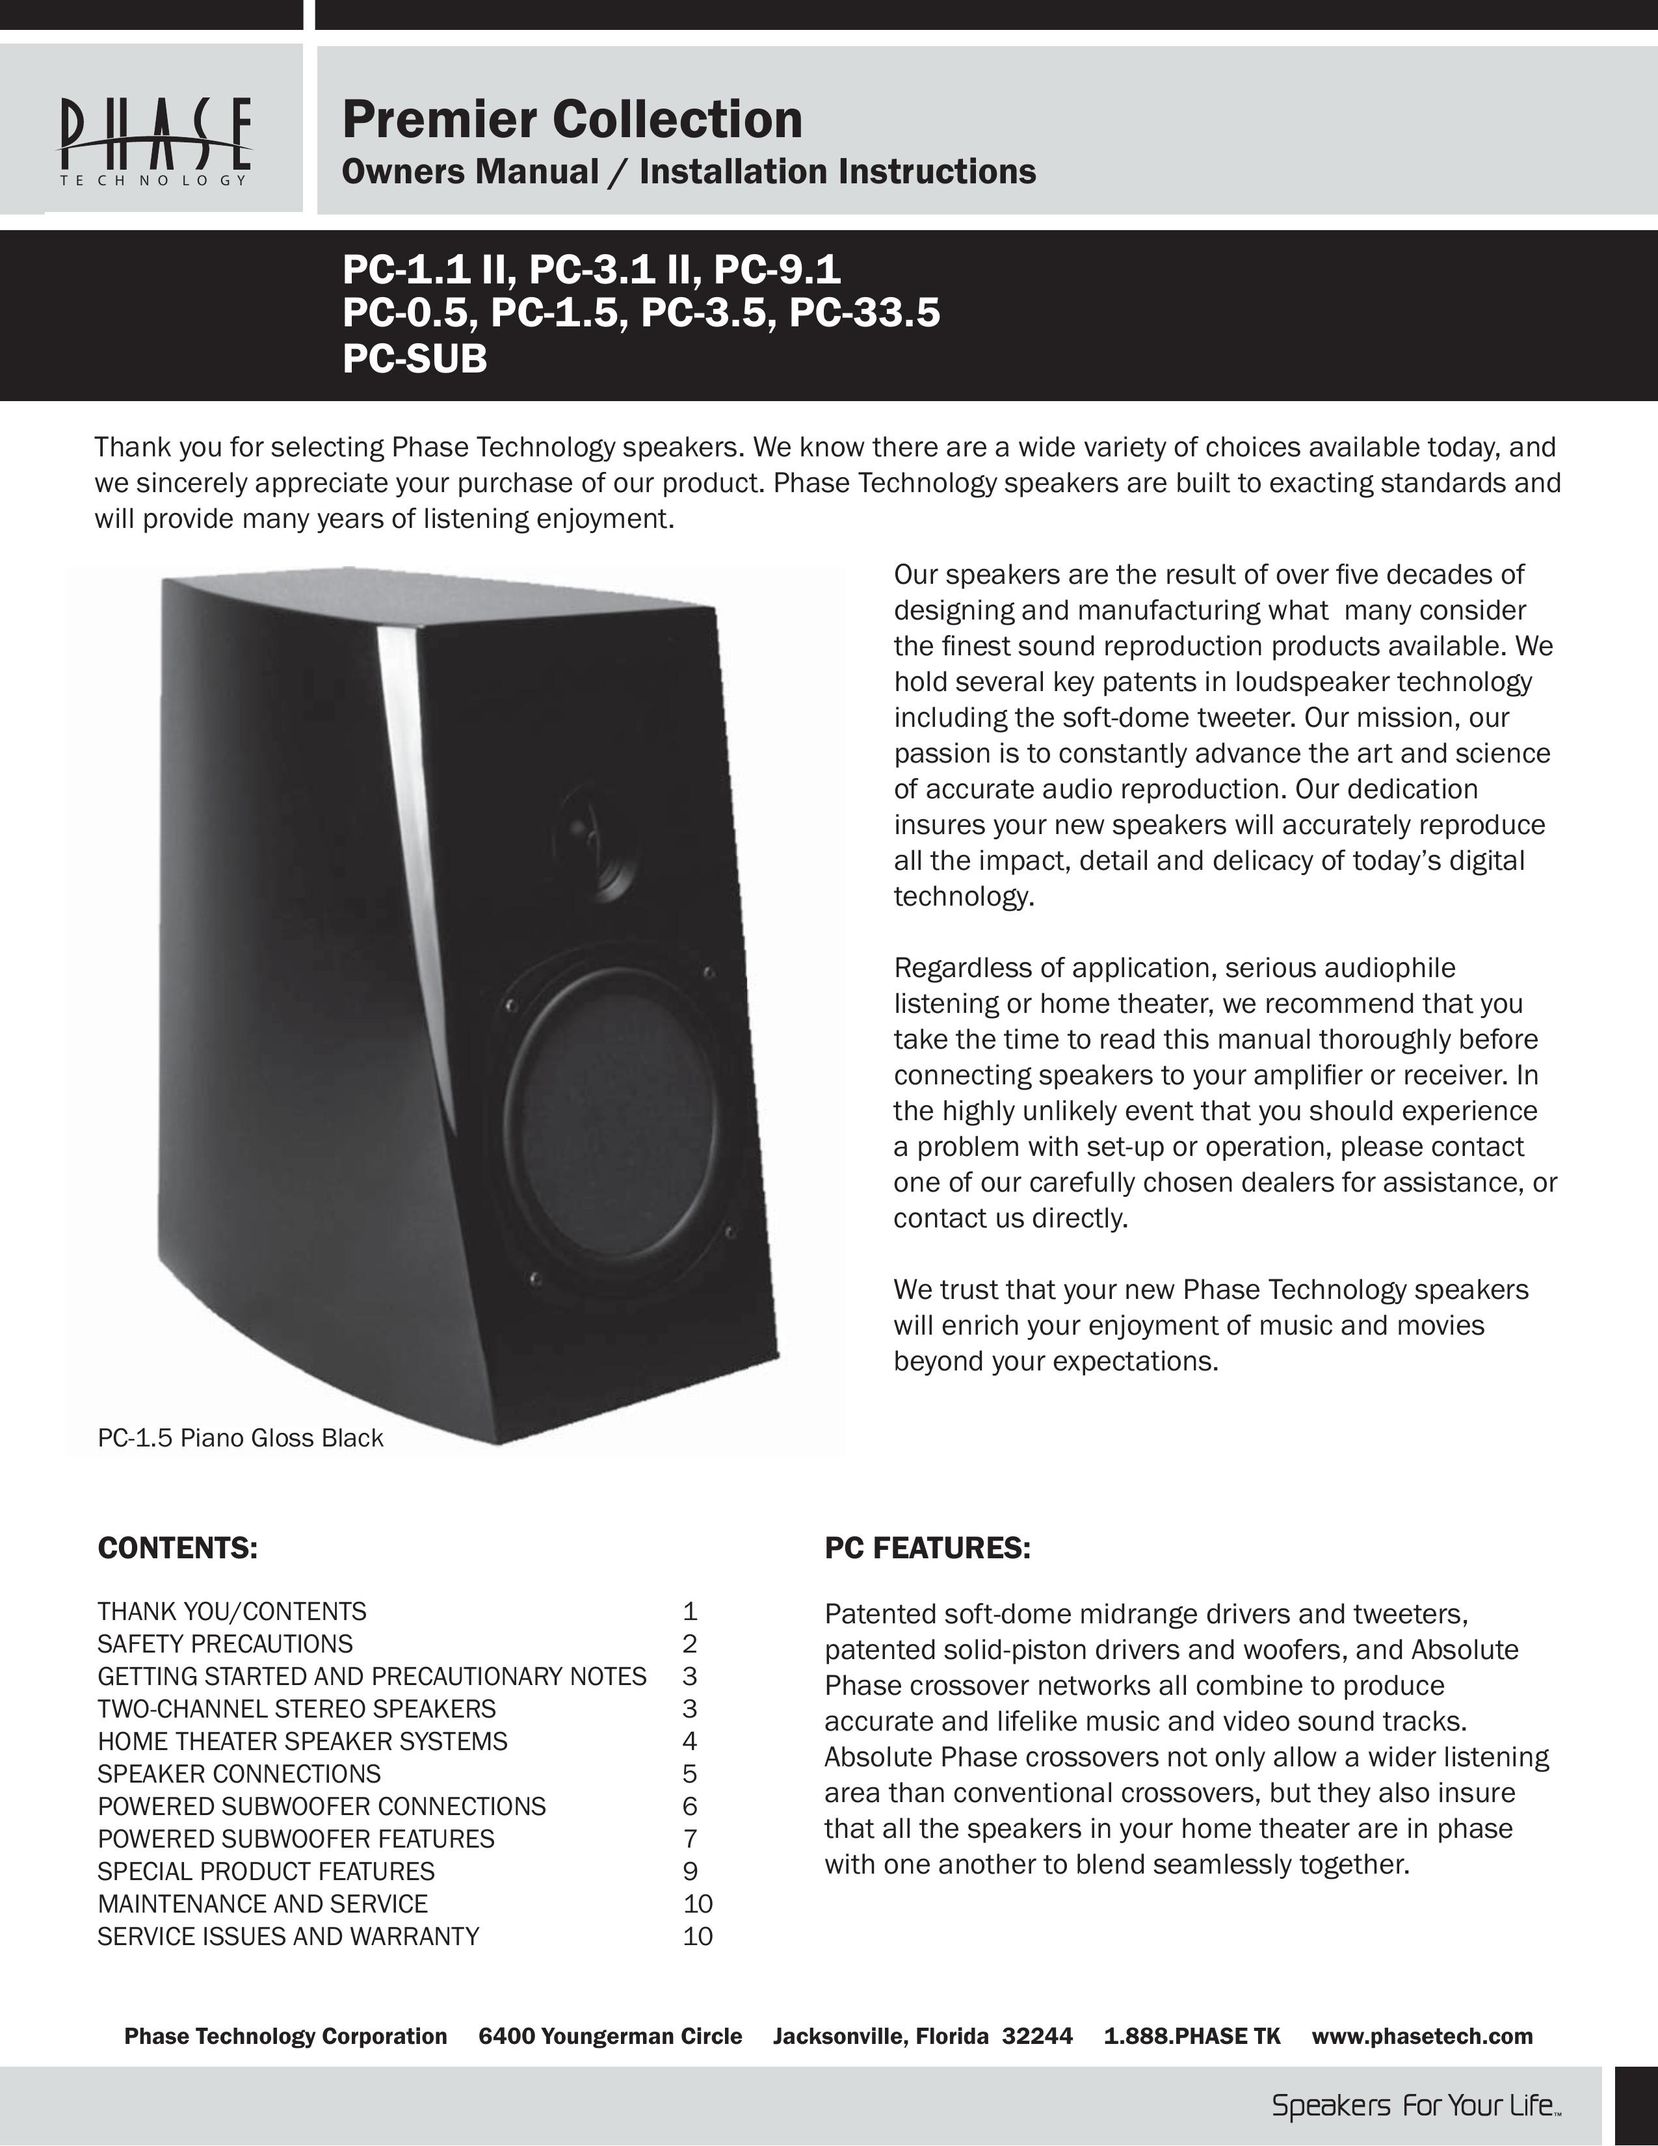 Phase Technology PC-1.1 II Speaker User Manual